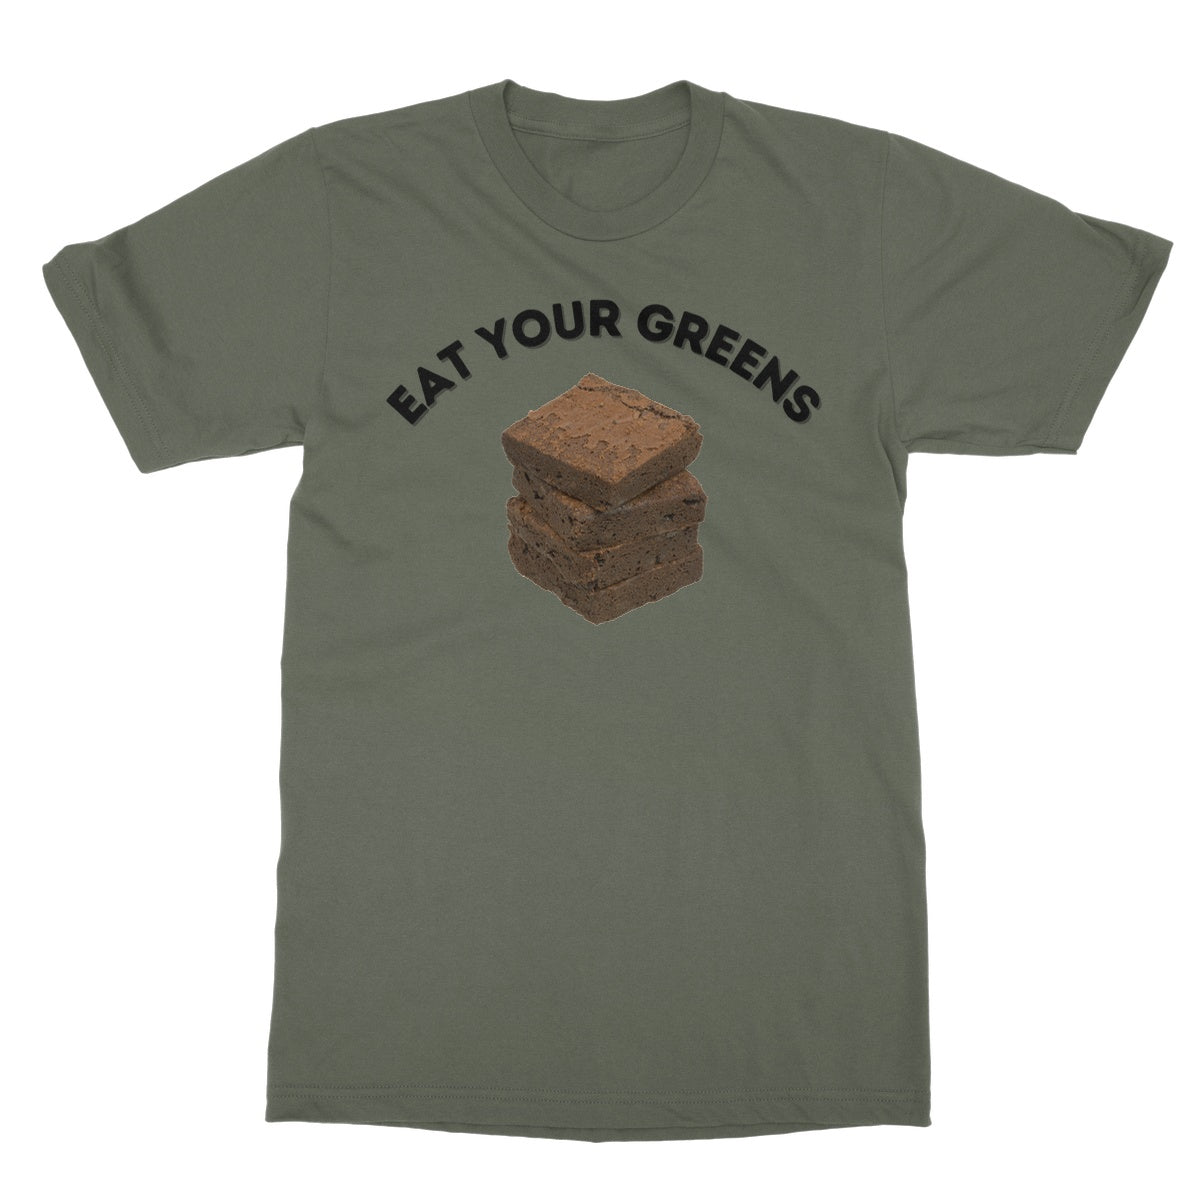 eat your greens t shirt green